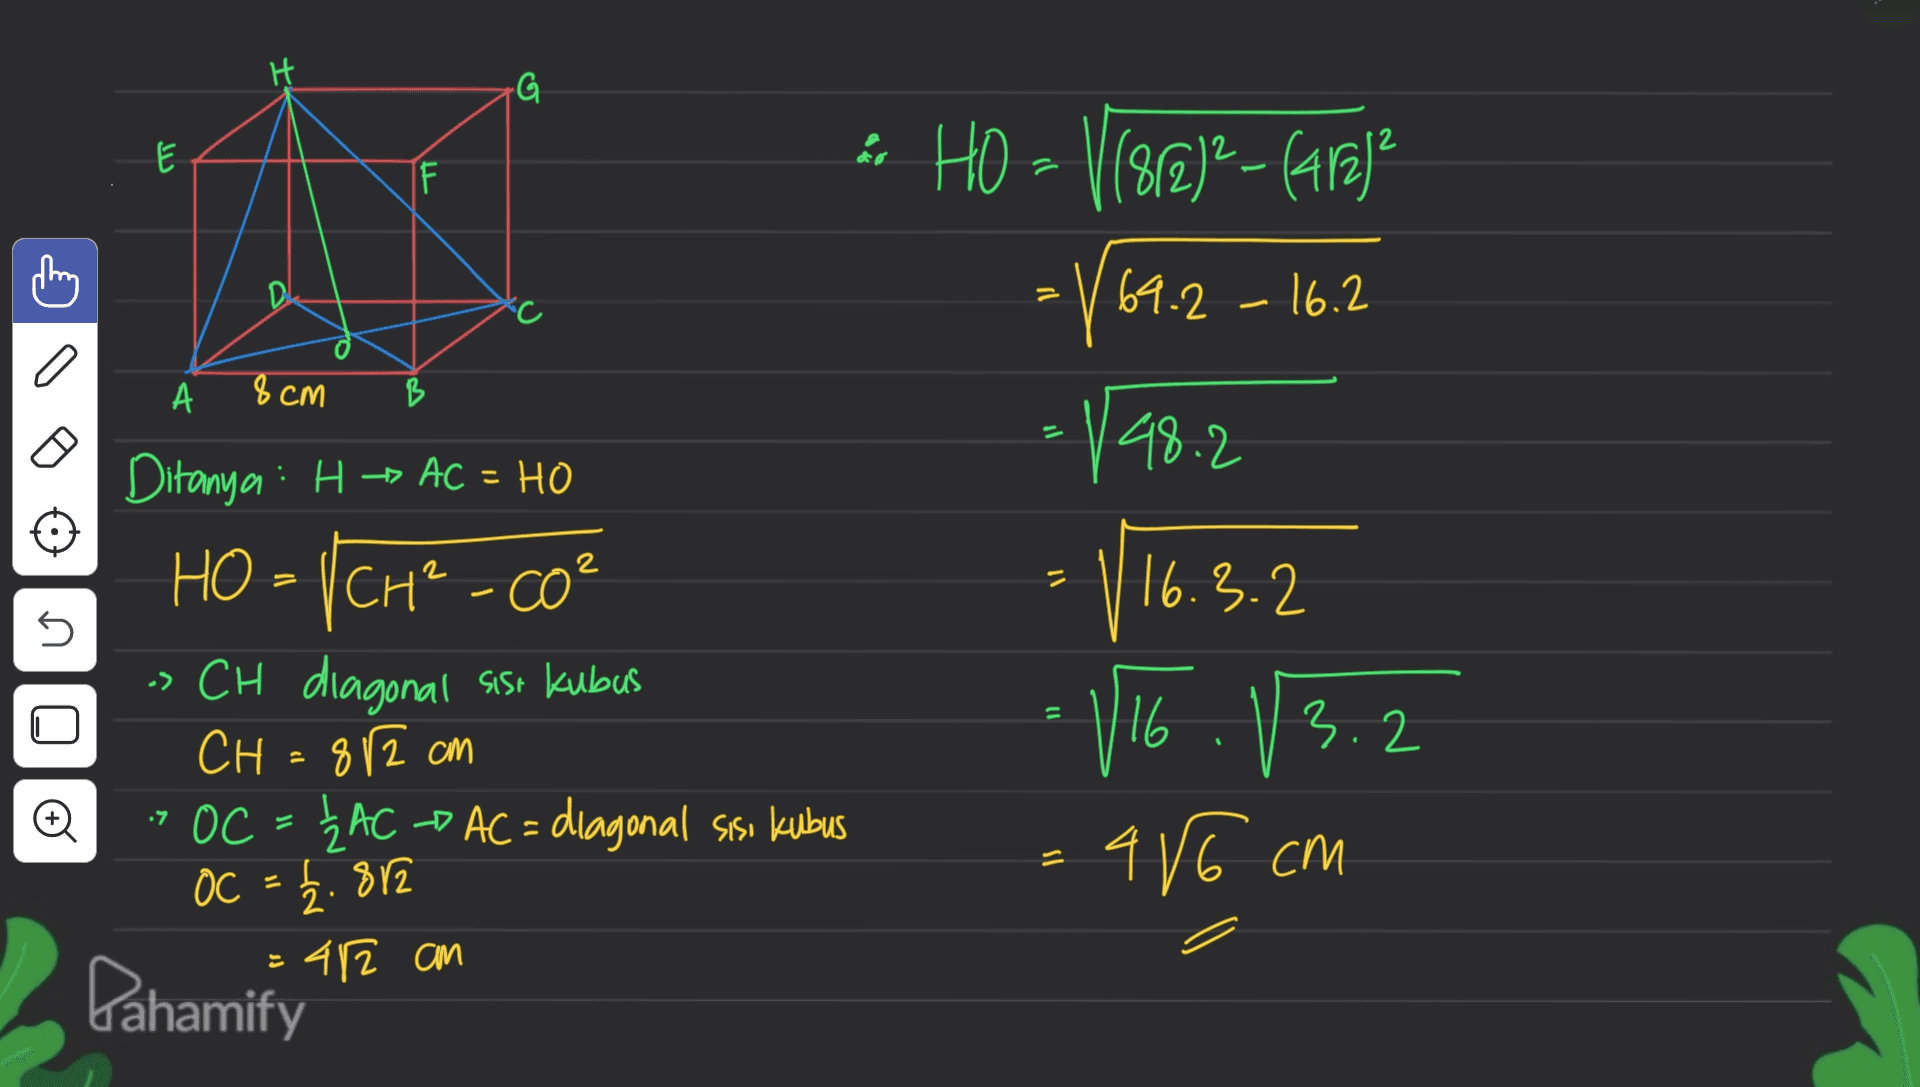 G الا E F & HO = V1881-faral? 69.2 - 16.2 thing D =169 a А 8cm B il 48.2 こ = 16.3.2 U 5 11 Ditanya : H -> AC = HO HO - 1 CHP - co? CH² Co² -> CH diagonal sise kubus CH=812 cm > OC = {AC -AC = diagonal sisi kubus OC = 12. 812 42 an V16 13.2 46 cm # sl Pahamify 